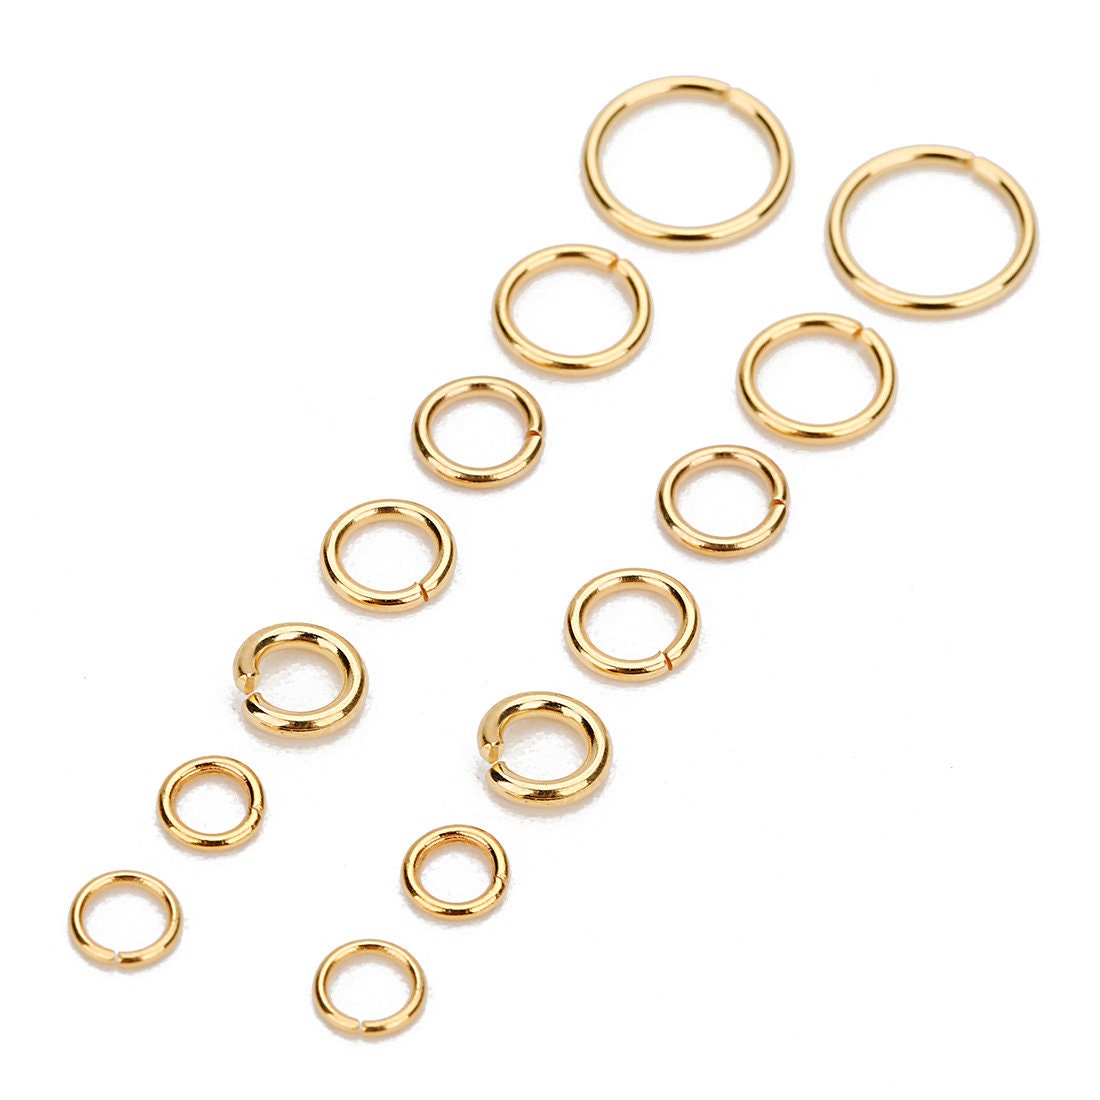 4mm/21g Jump Rings- Satin Gold